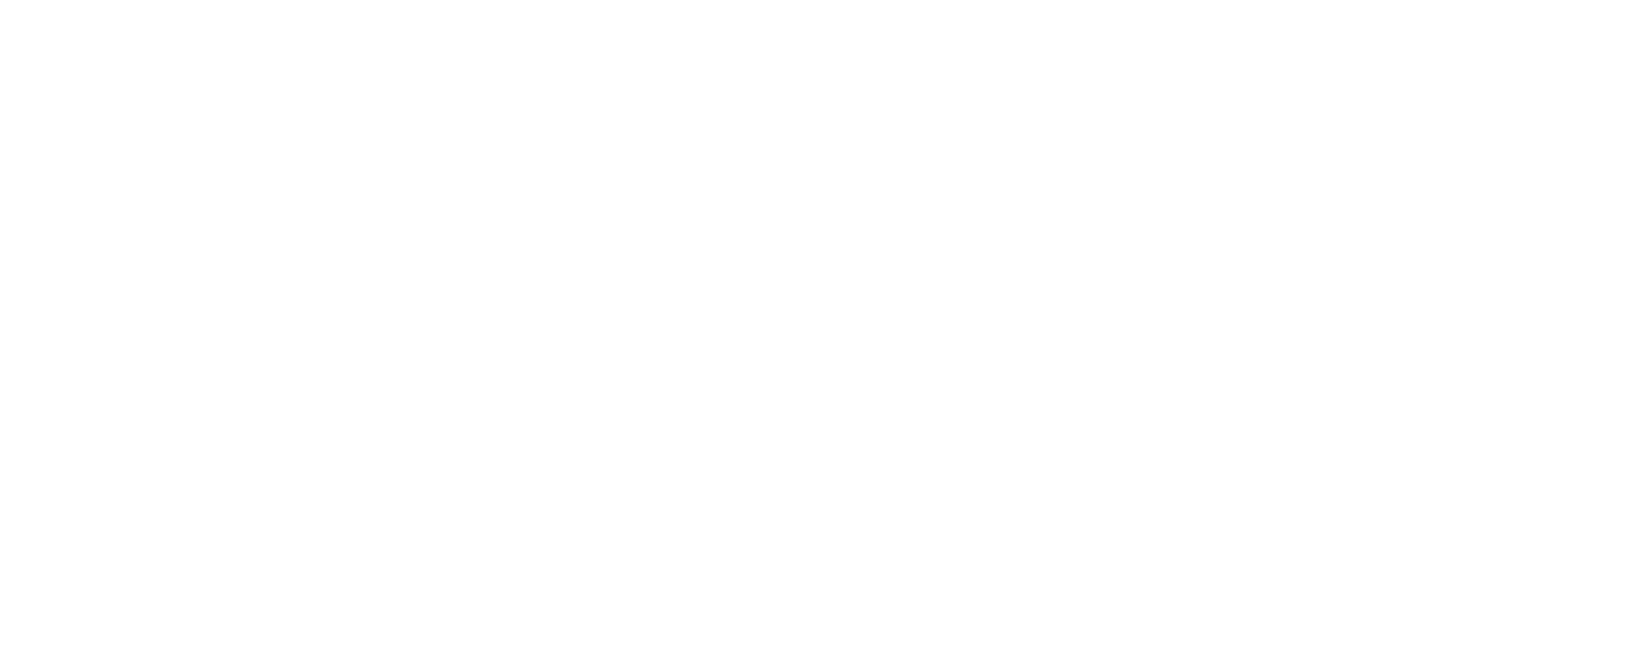 J-IV Contracting LLC